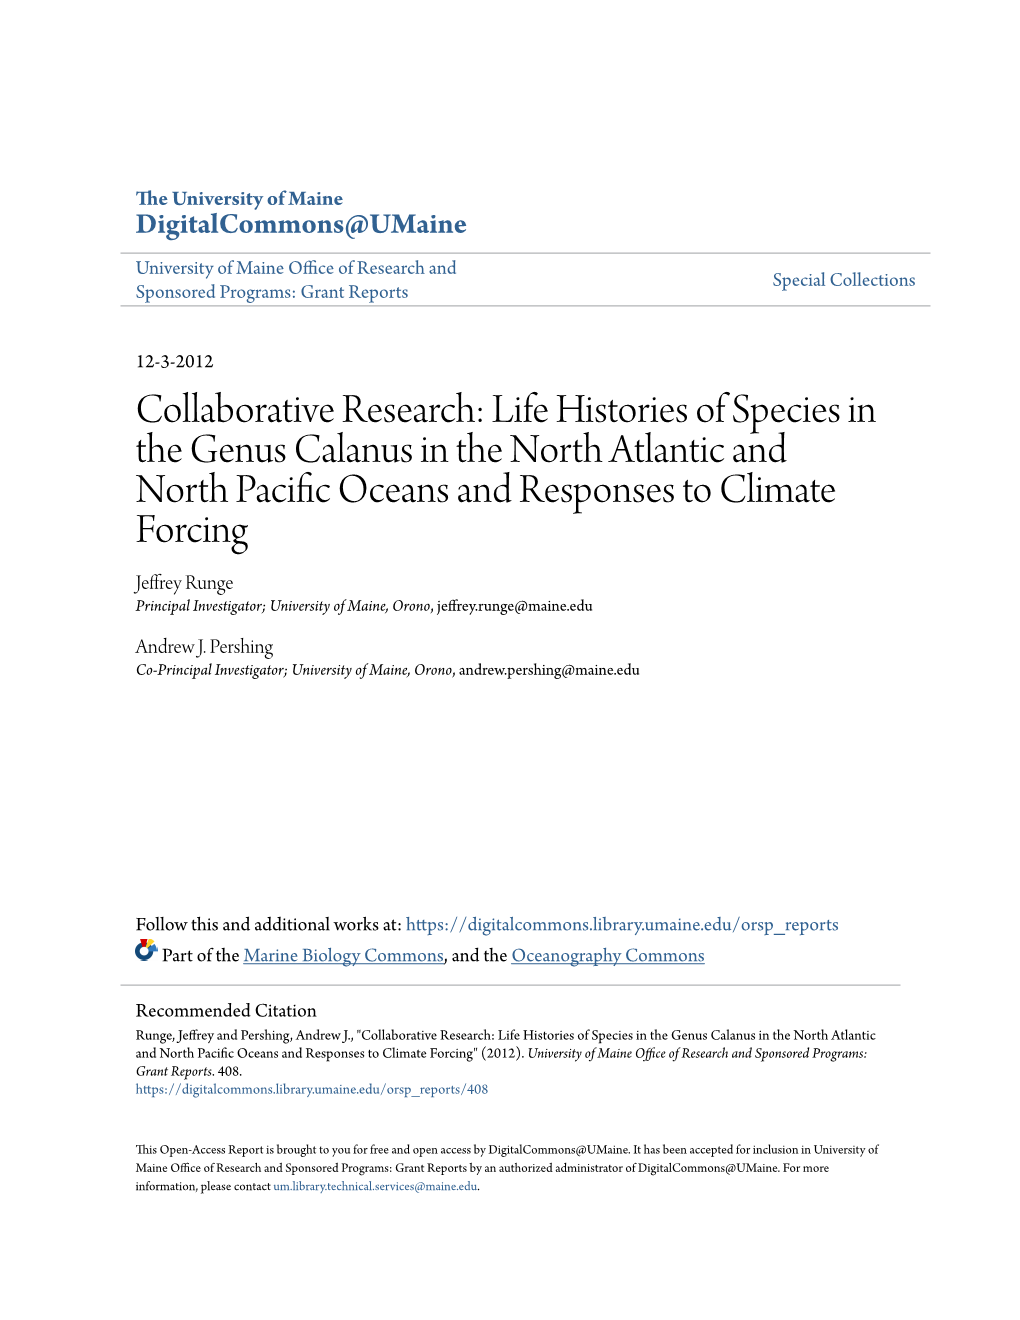 Life Histories of Species in the Genus Calanus in the North Atlantic And